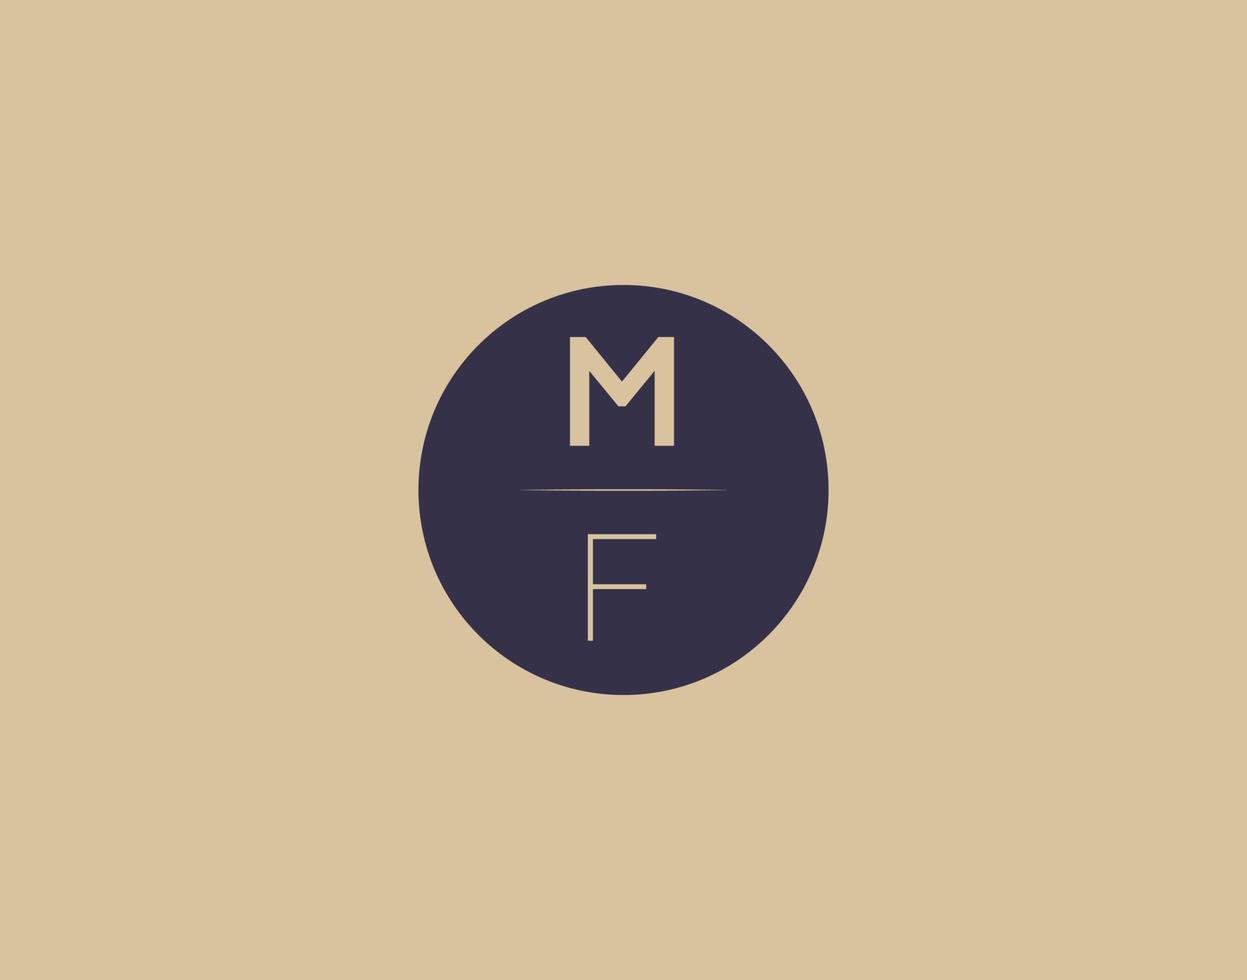 MF letter modern elegant logo design vector images